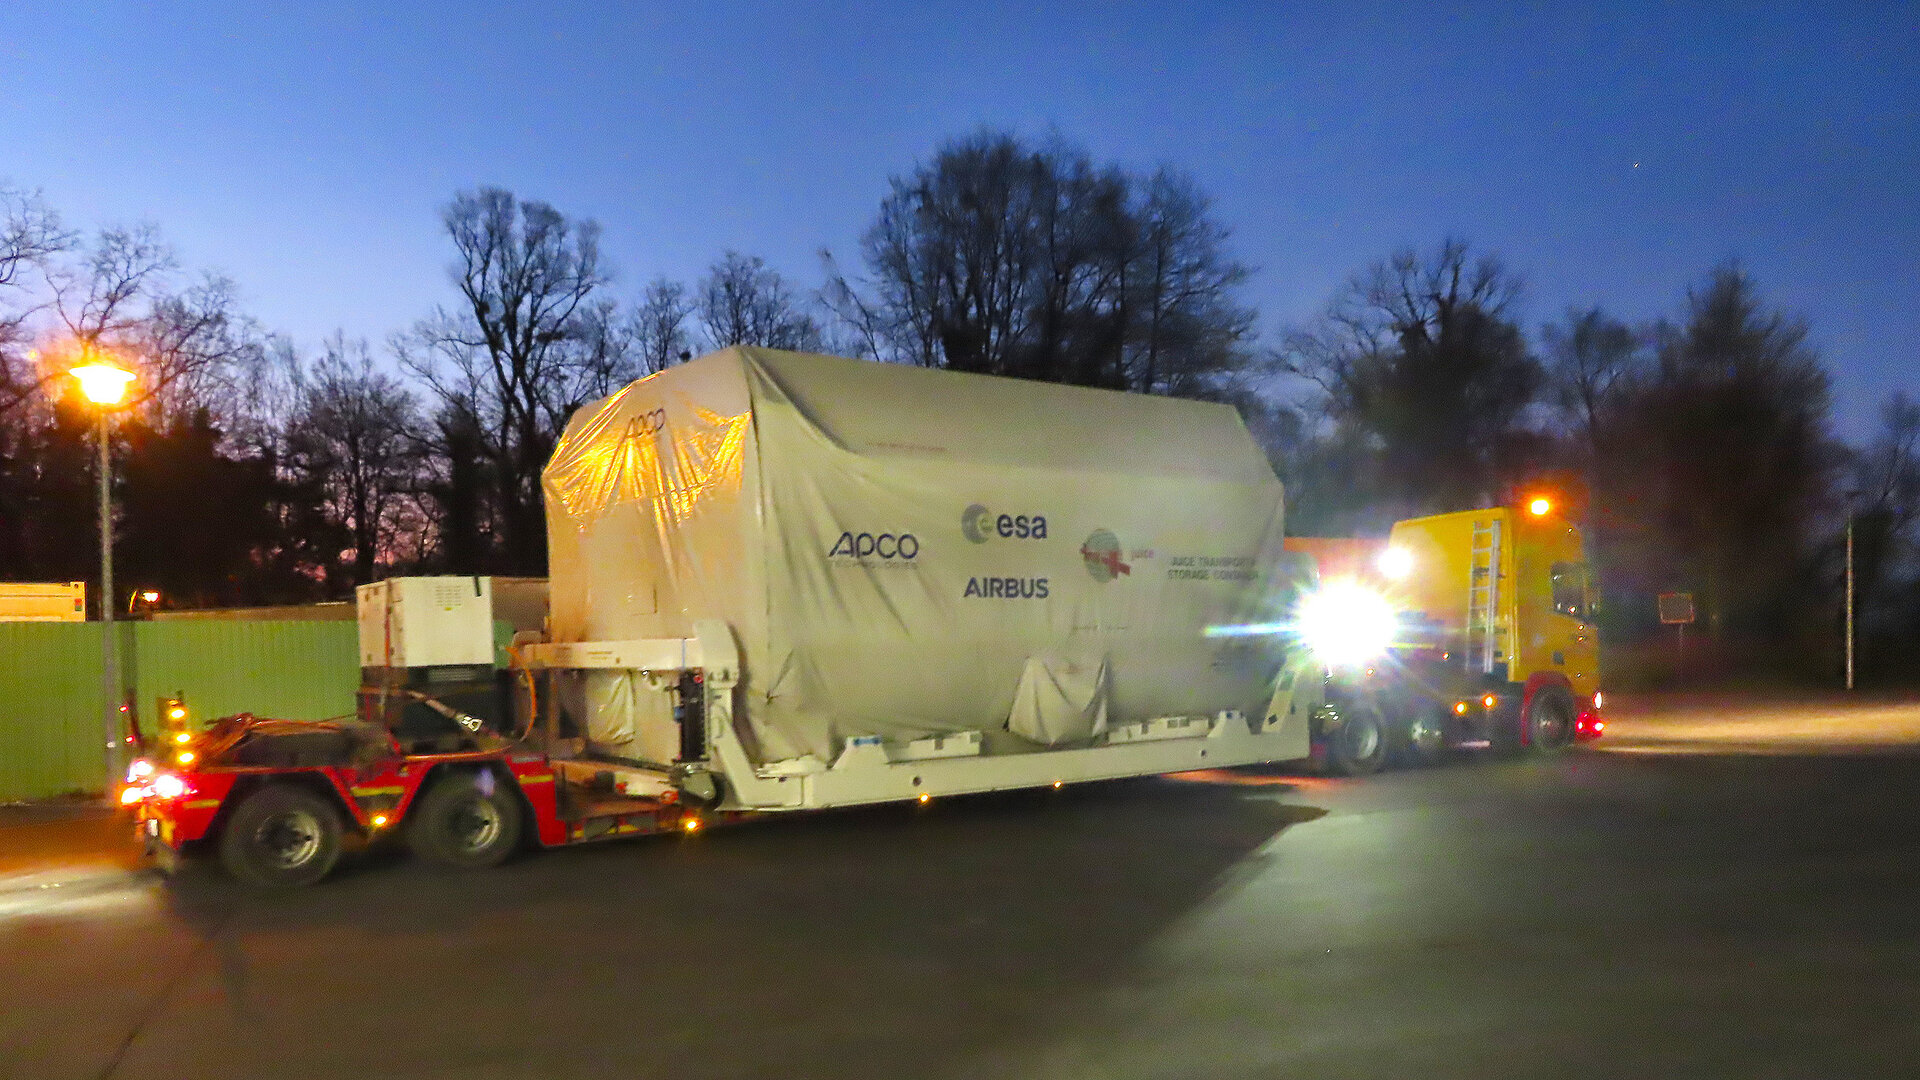 ESA’s Jupiter explorer Juice arrives for final integration at Airbus'facilities in Friedrichshafen, Germany